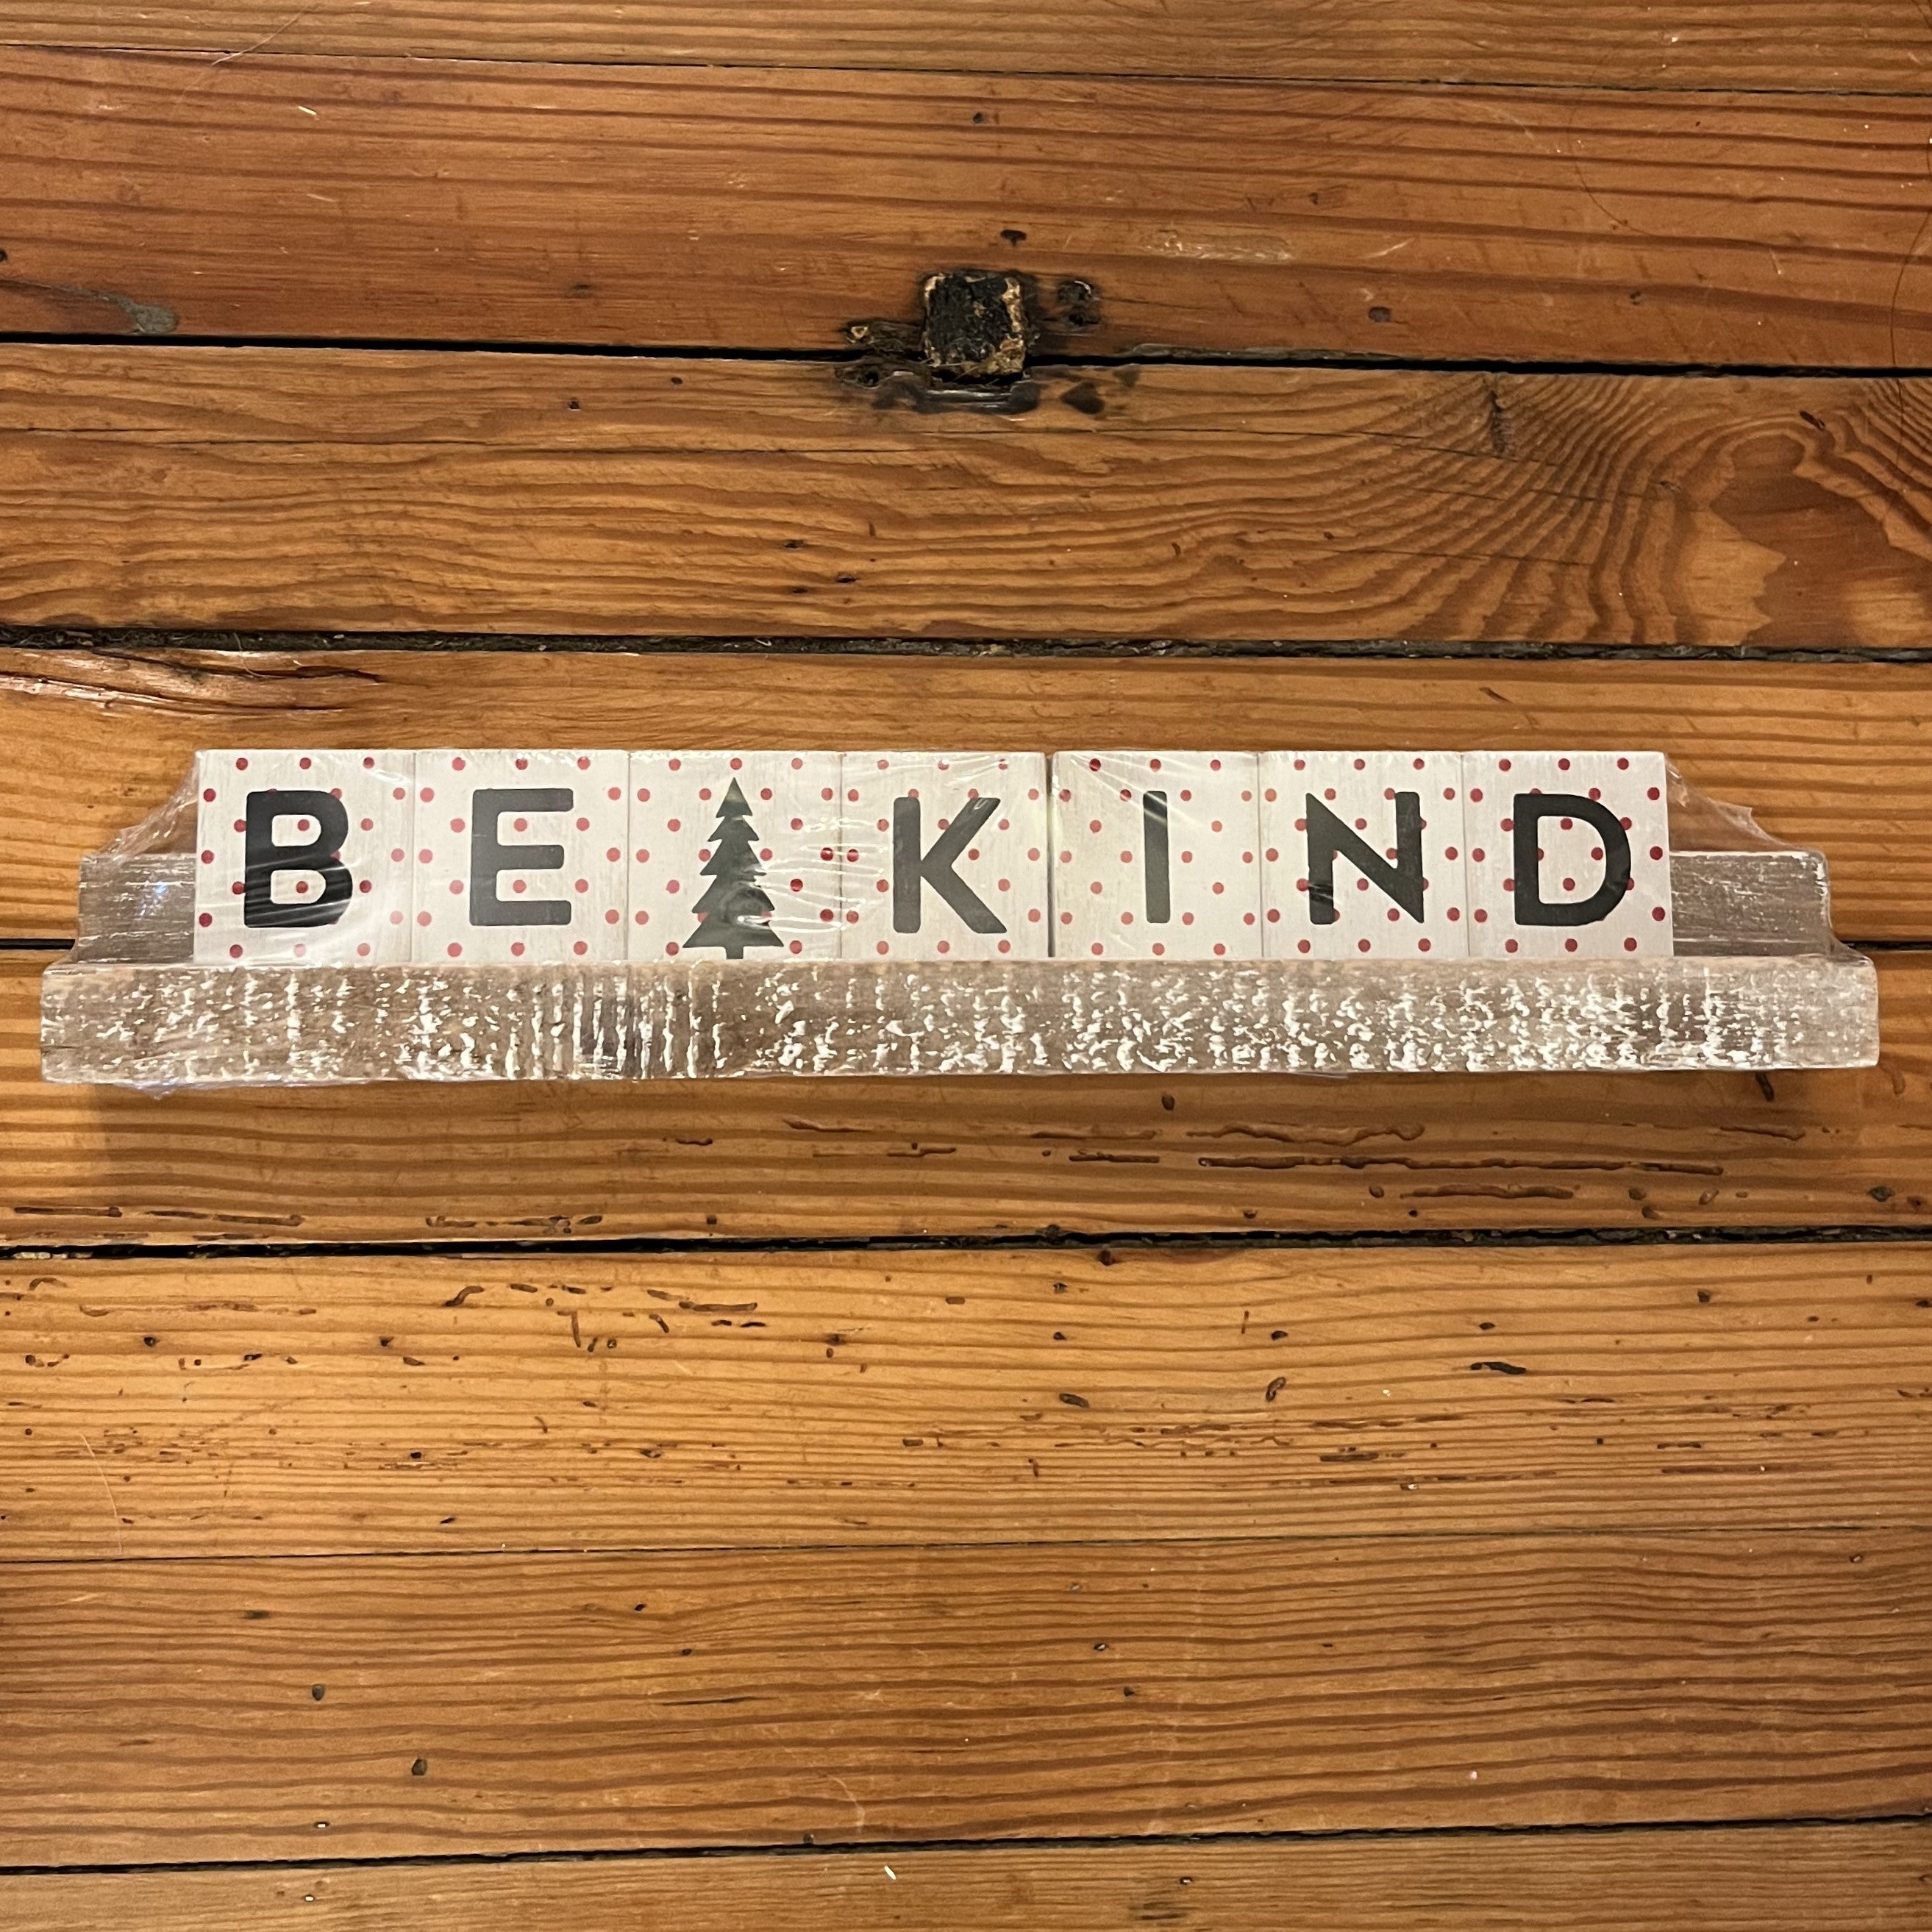 "Be Kind" Wood Tile Ledge